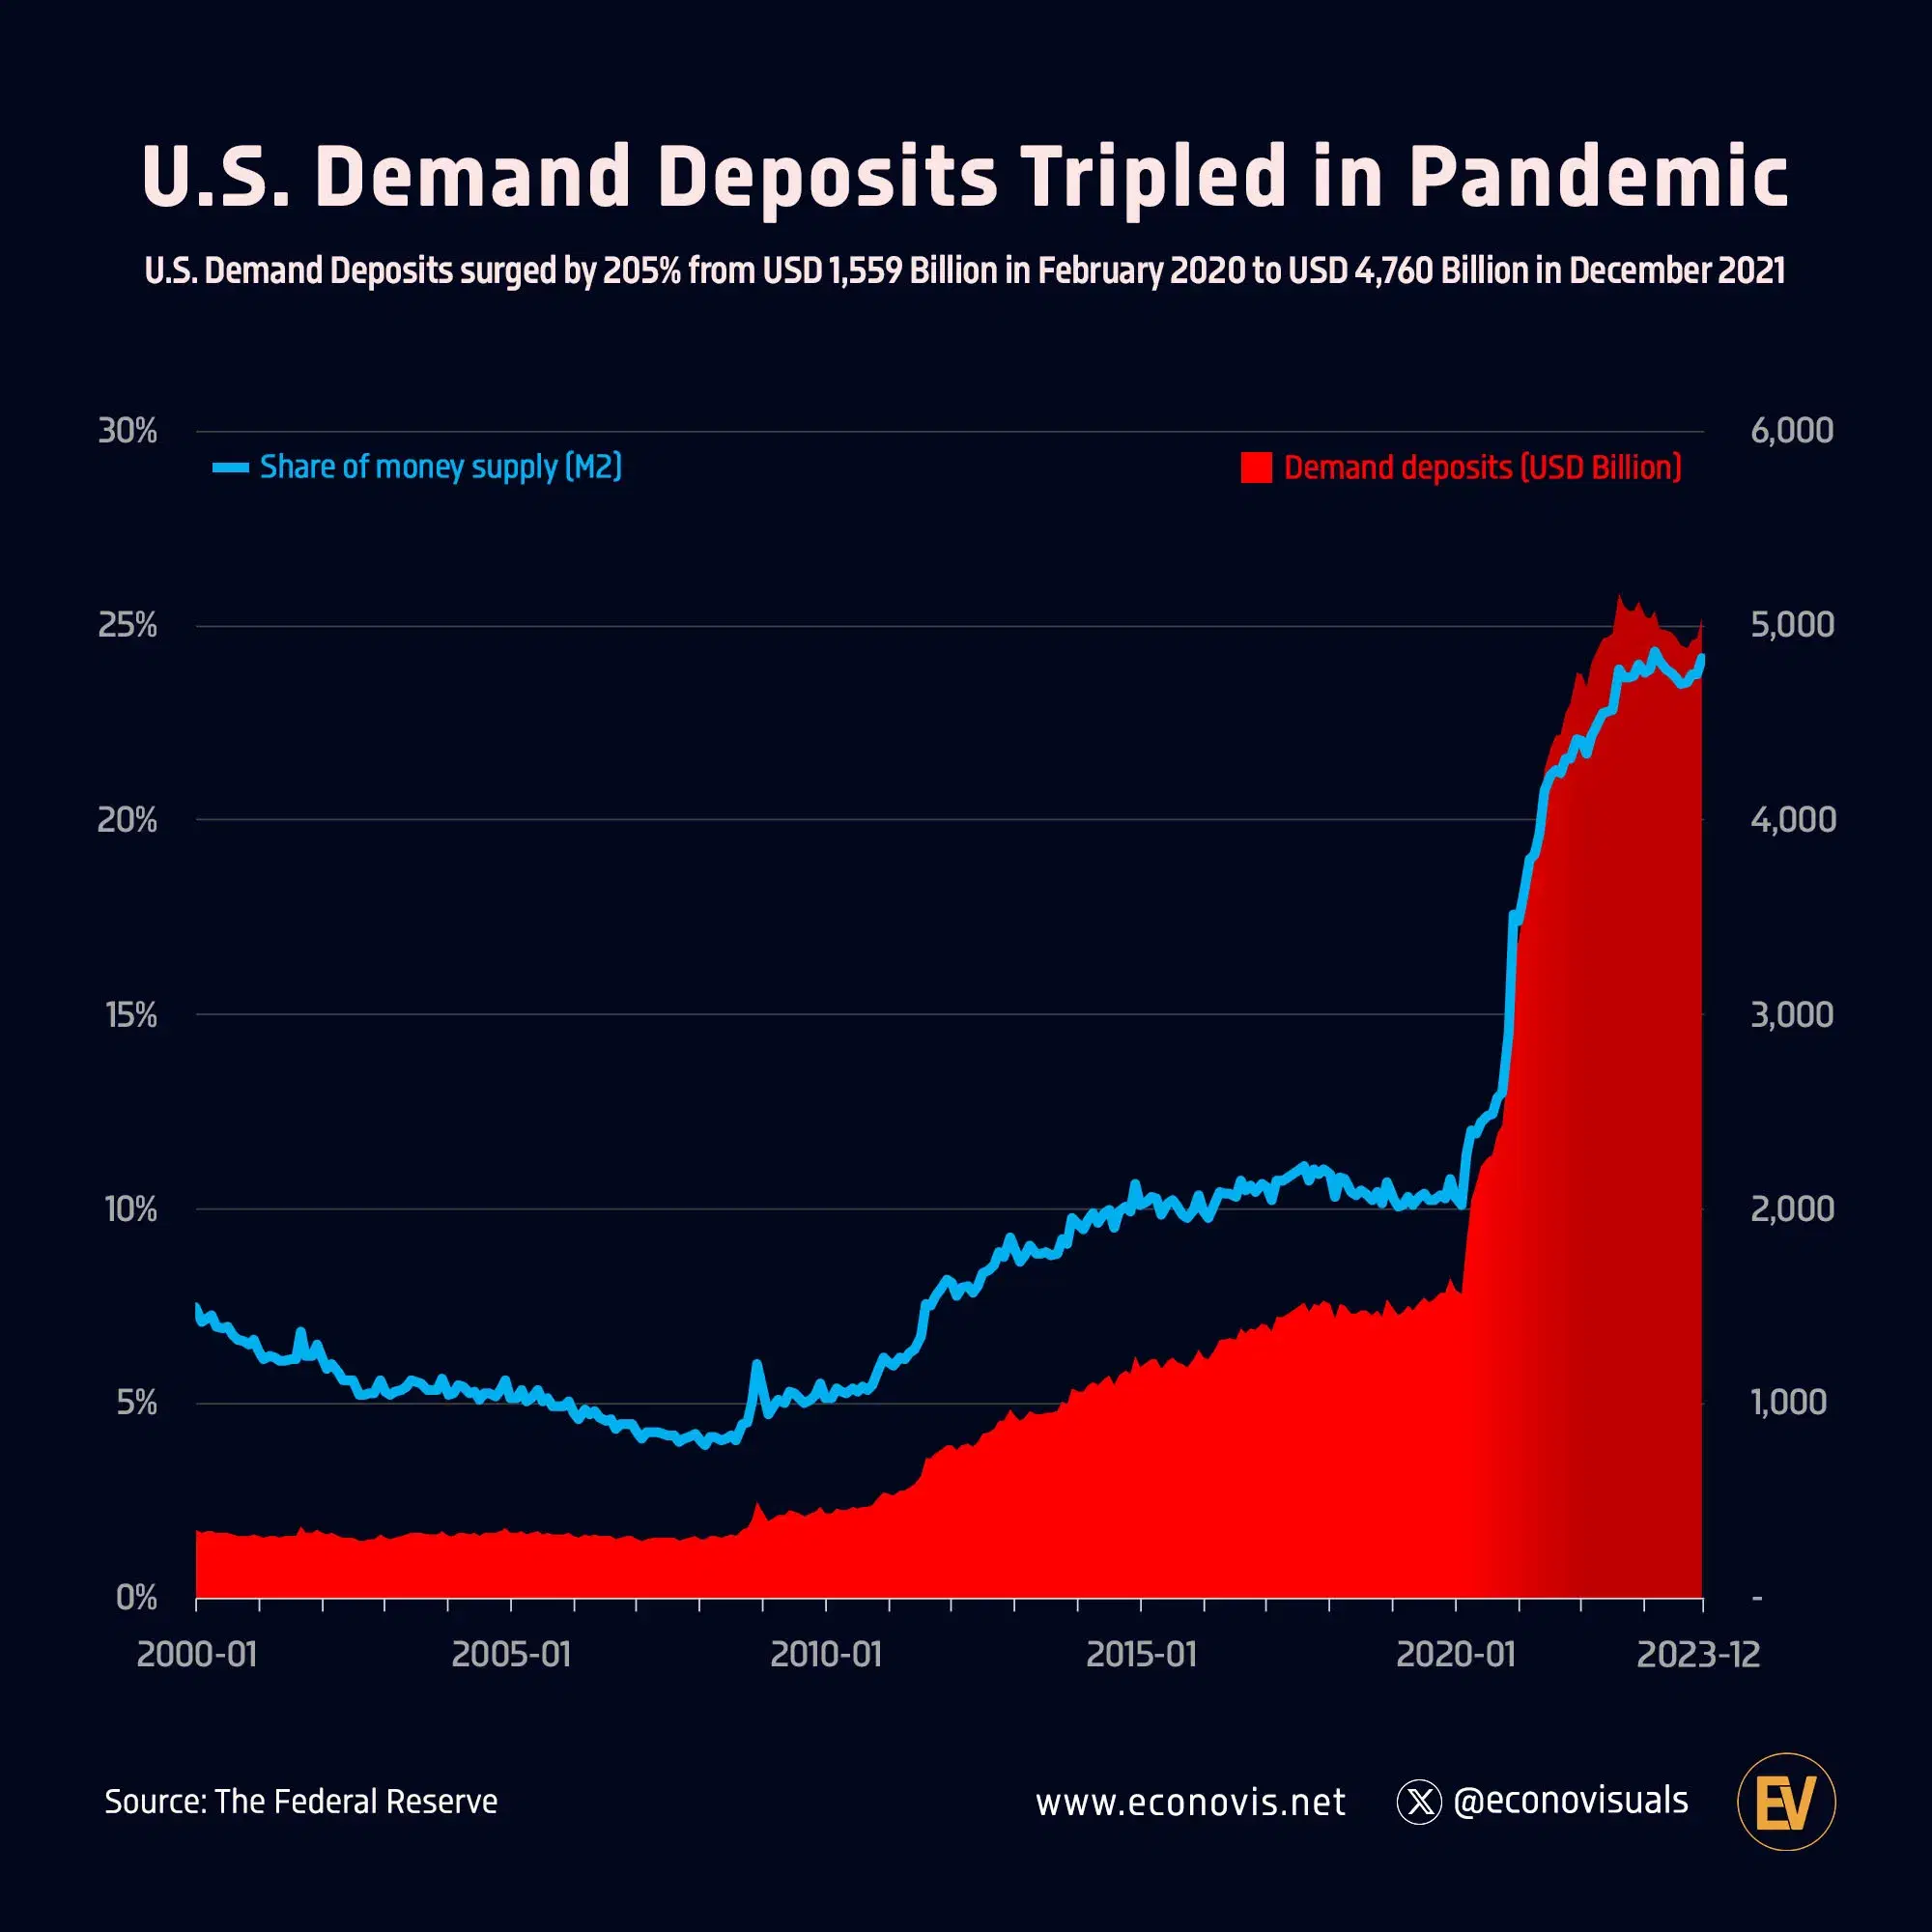 U.S. Demand Deposits Tripled in Pandemic